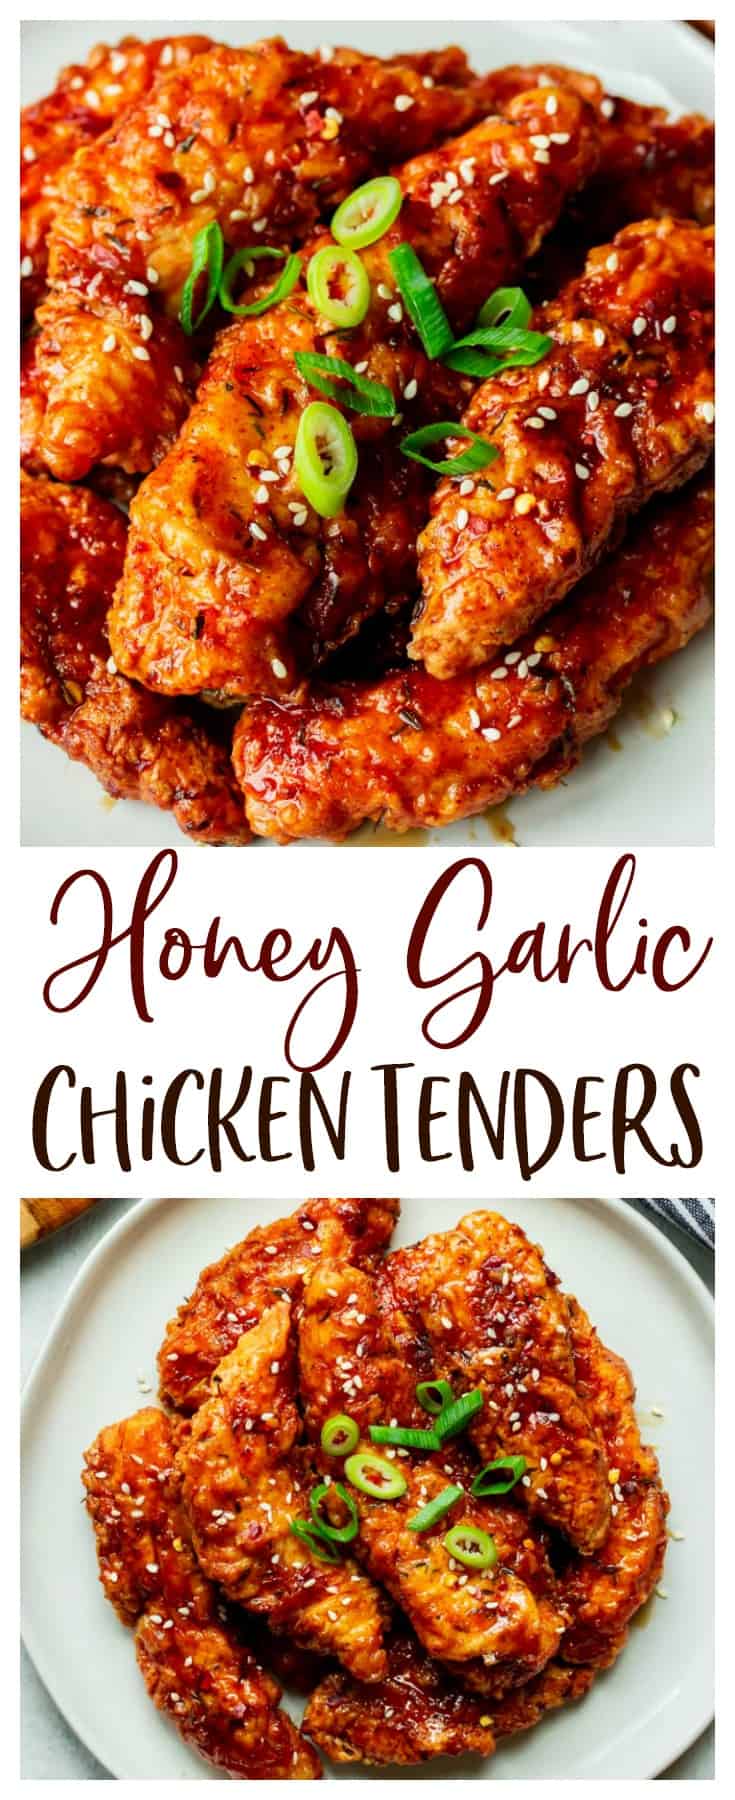 Easy Honey Garlic Chicken Recipe - Delicious Little Bites